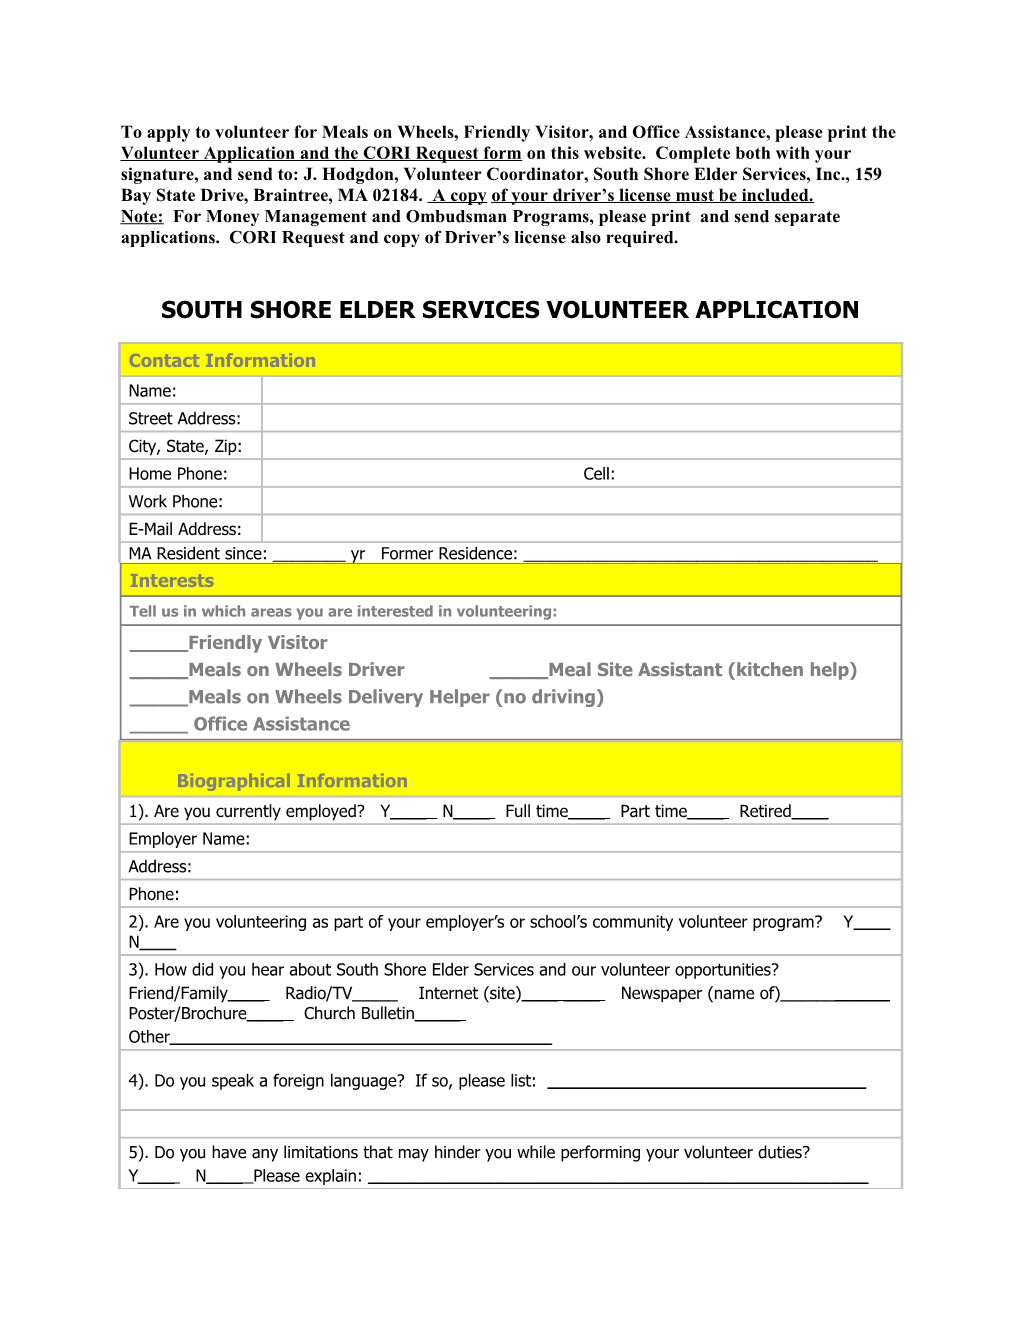 South Shore Elder Services Volunteer Application